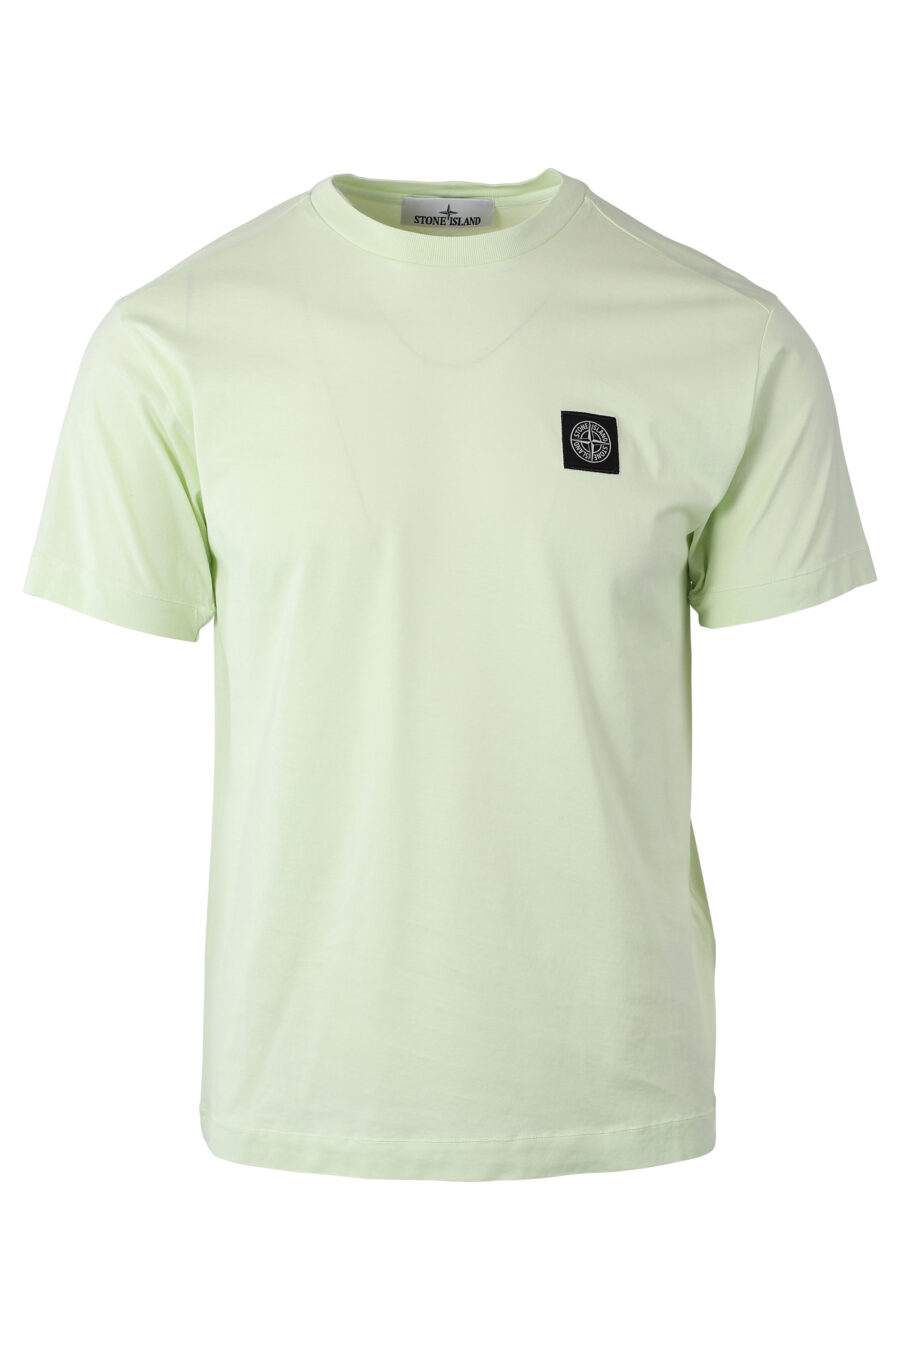 Camiseta verde con minilogo parche - IMG 1157